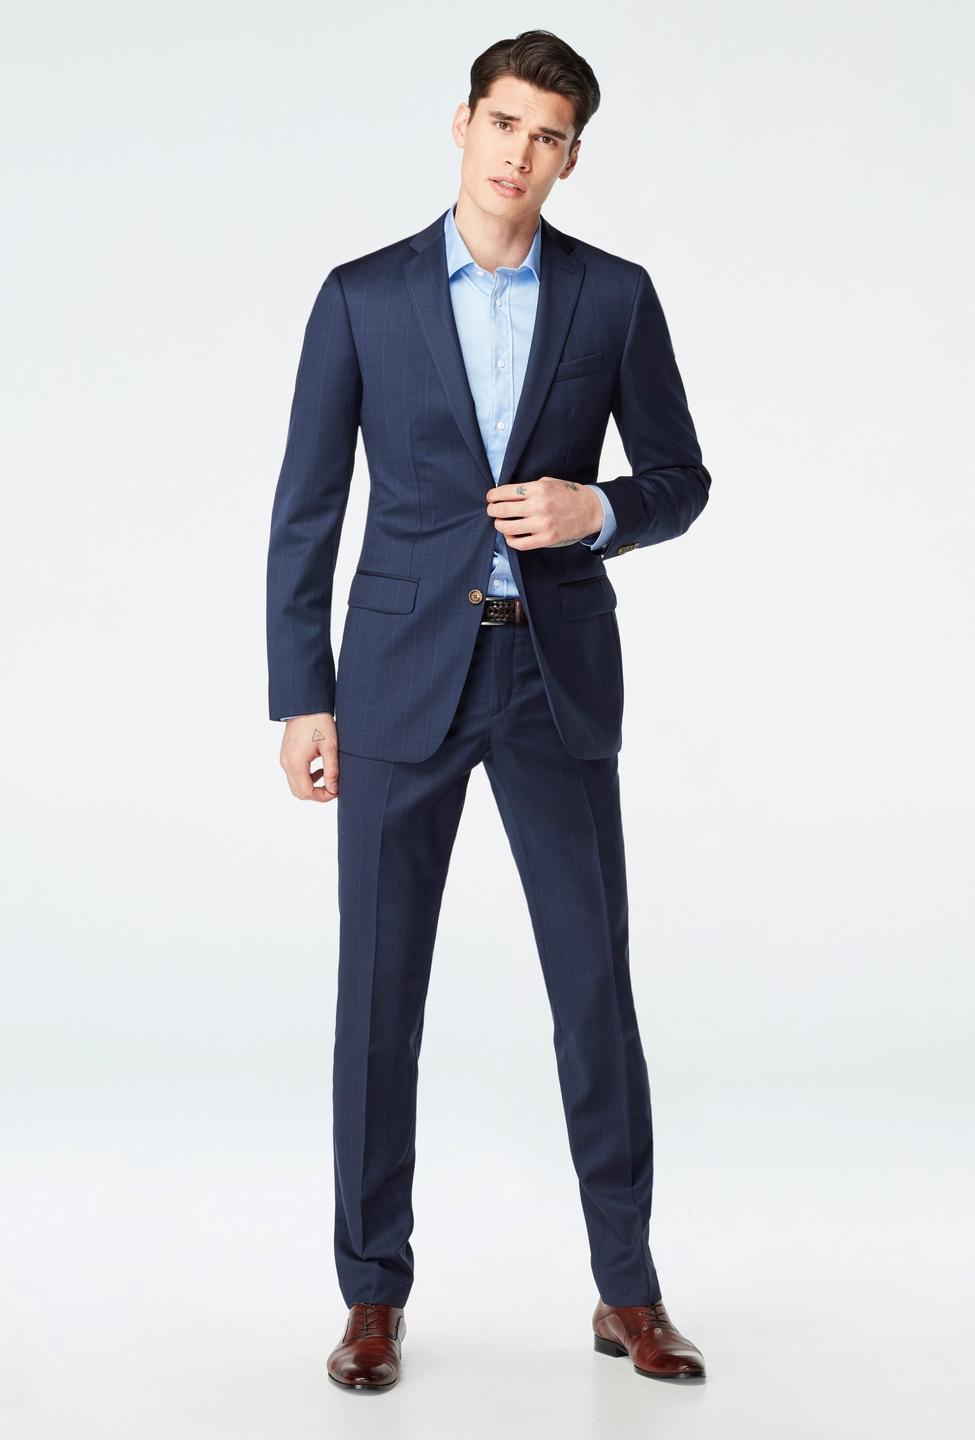 Blue suit - Hemsworth Plaid Design from Premium Indochino Collection